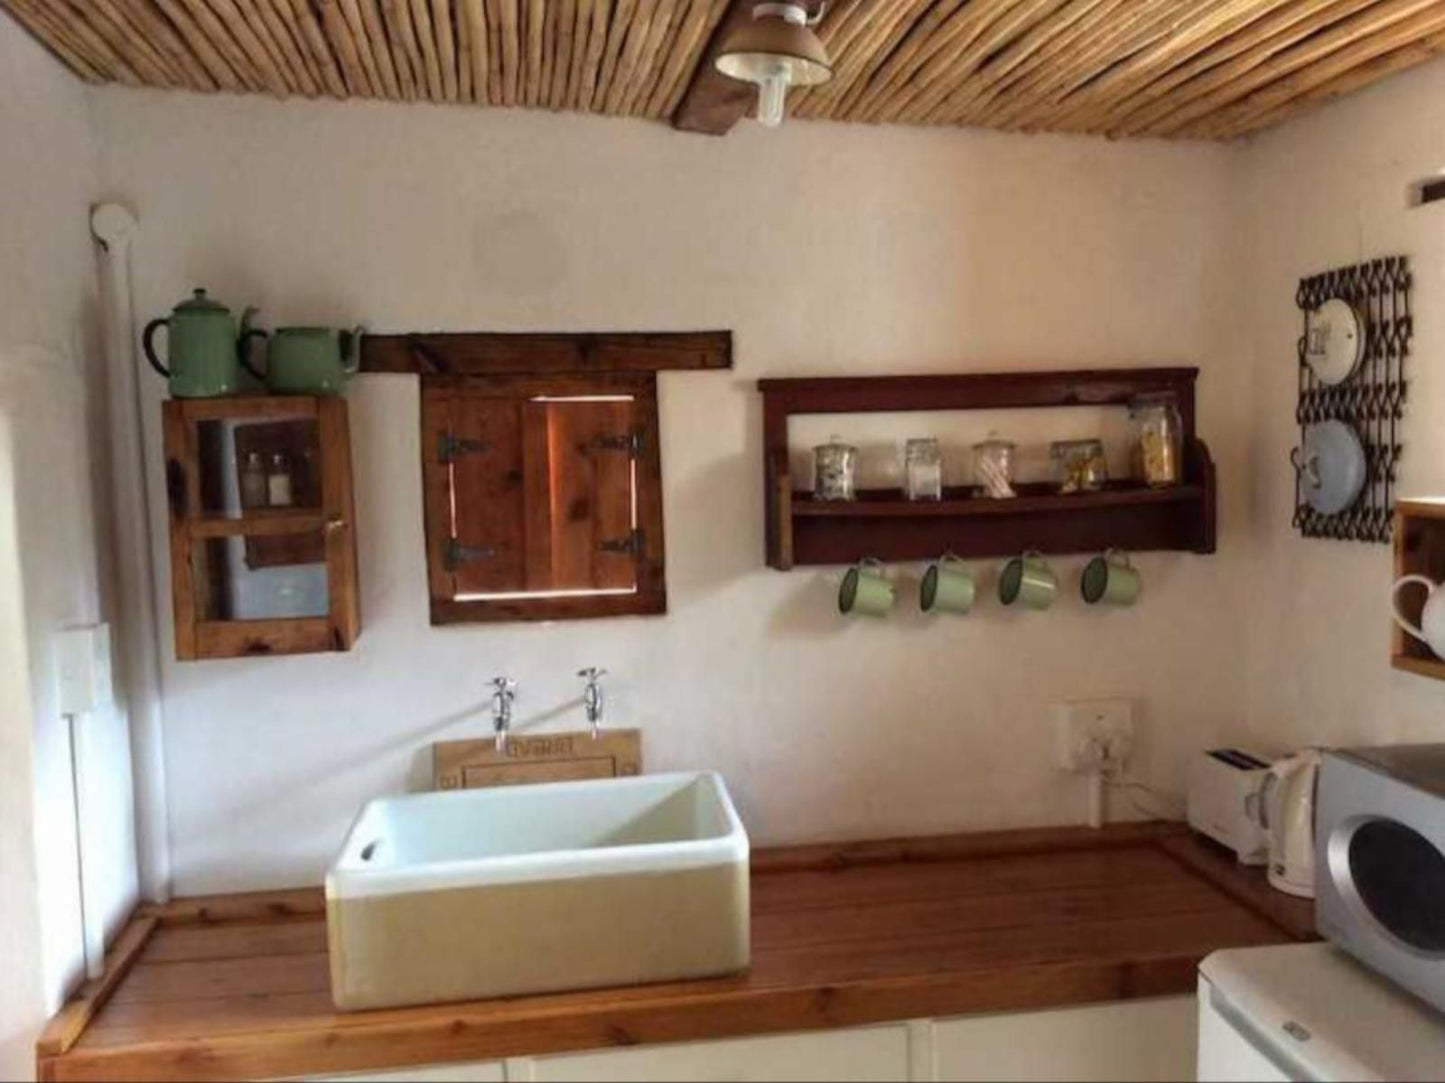 Brakdakkie Guest Cottages Prince Albert Western Cape South Africa Sauna, Wood